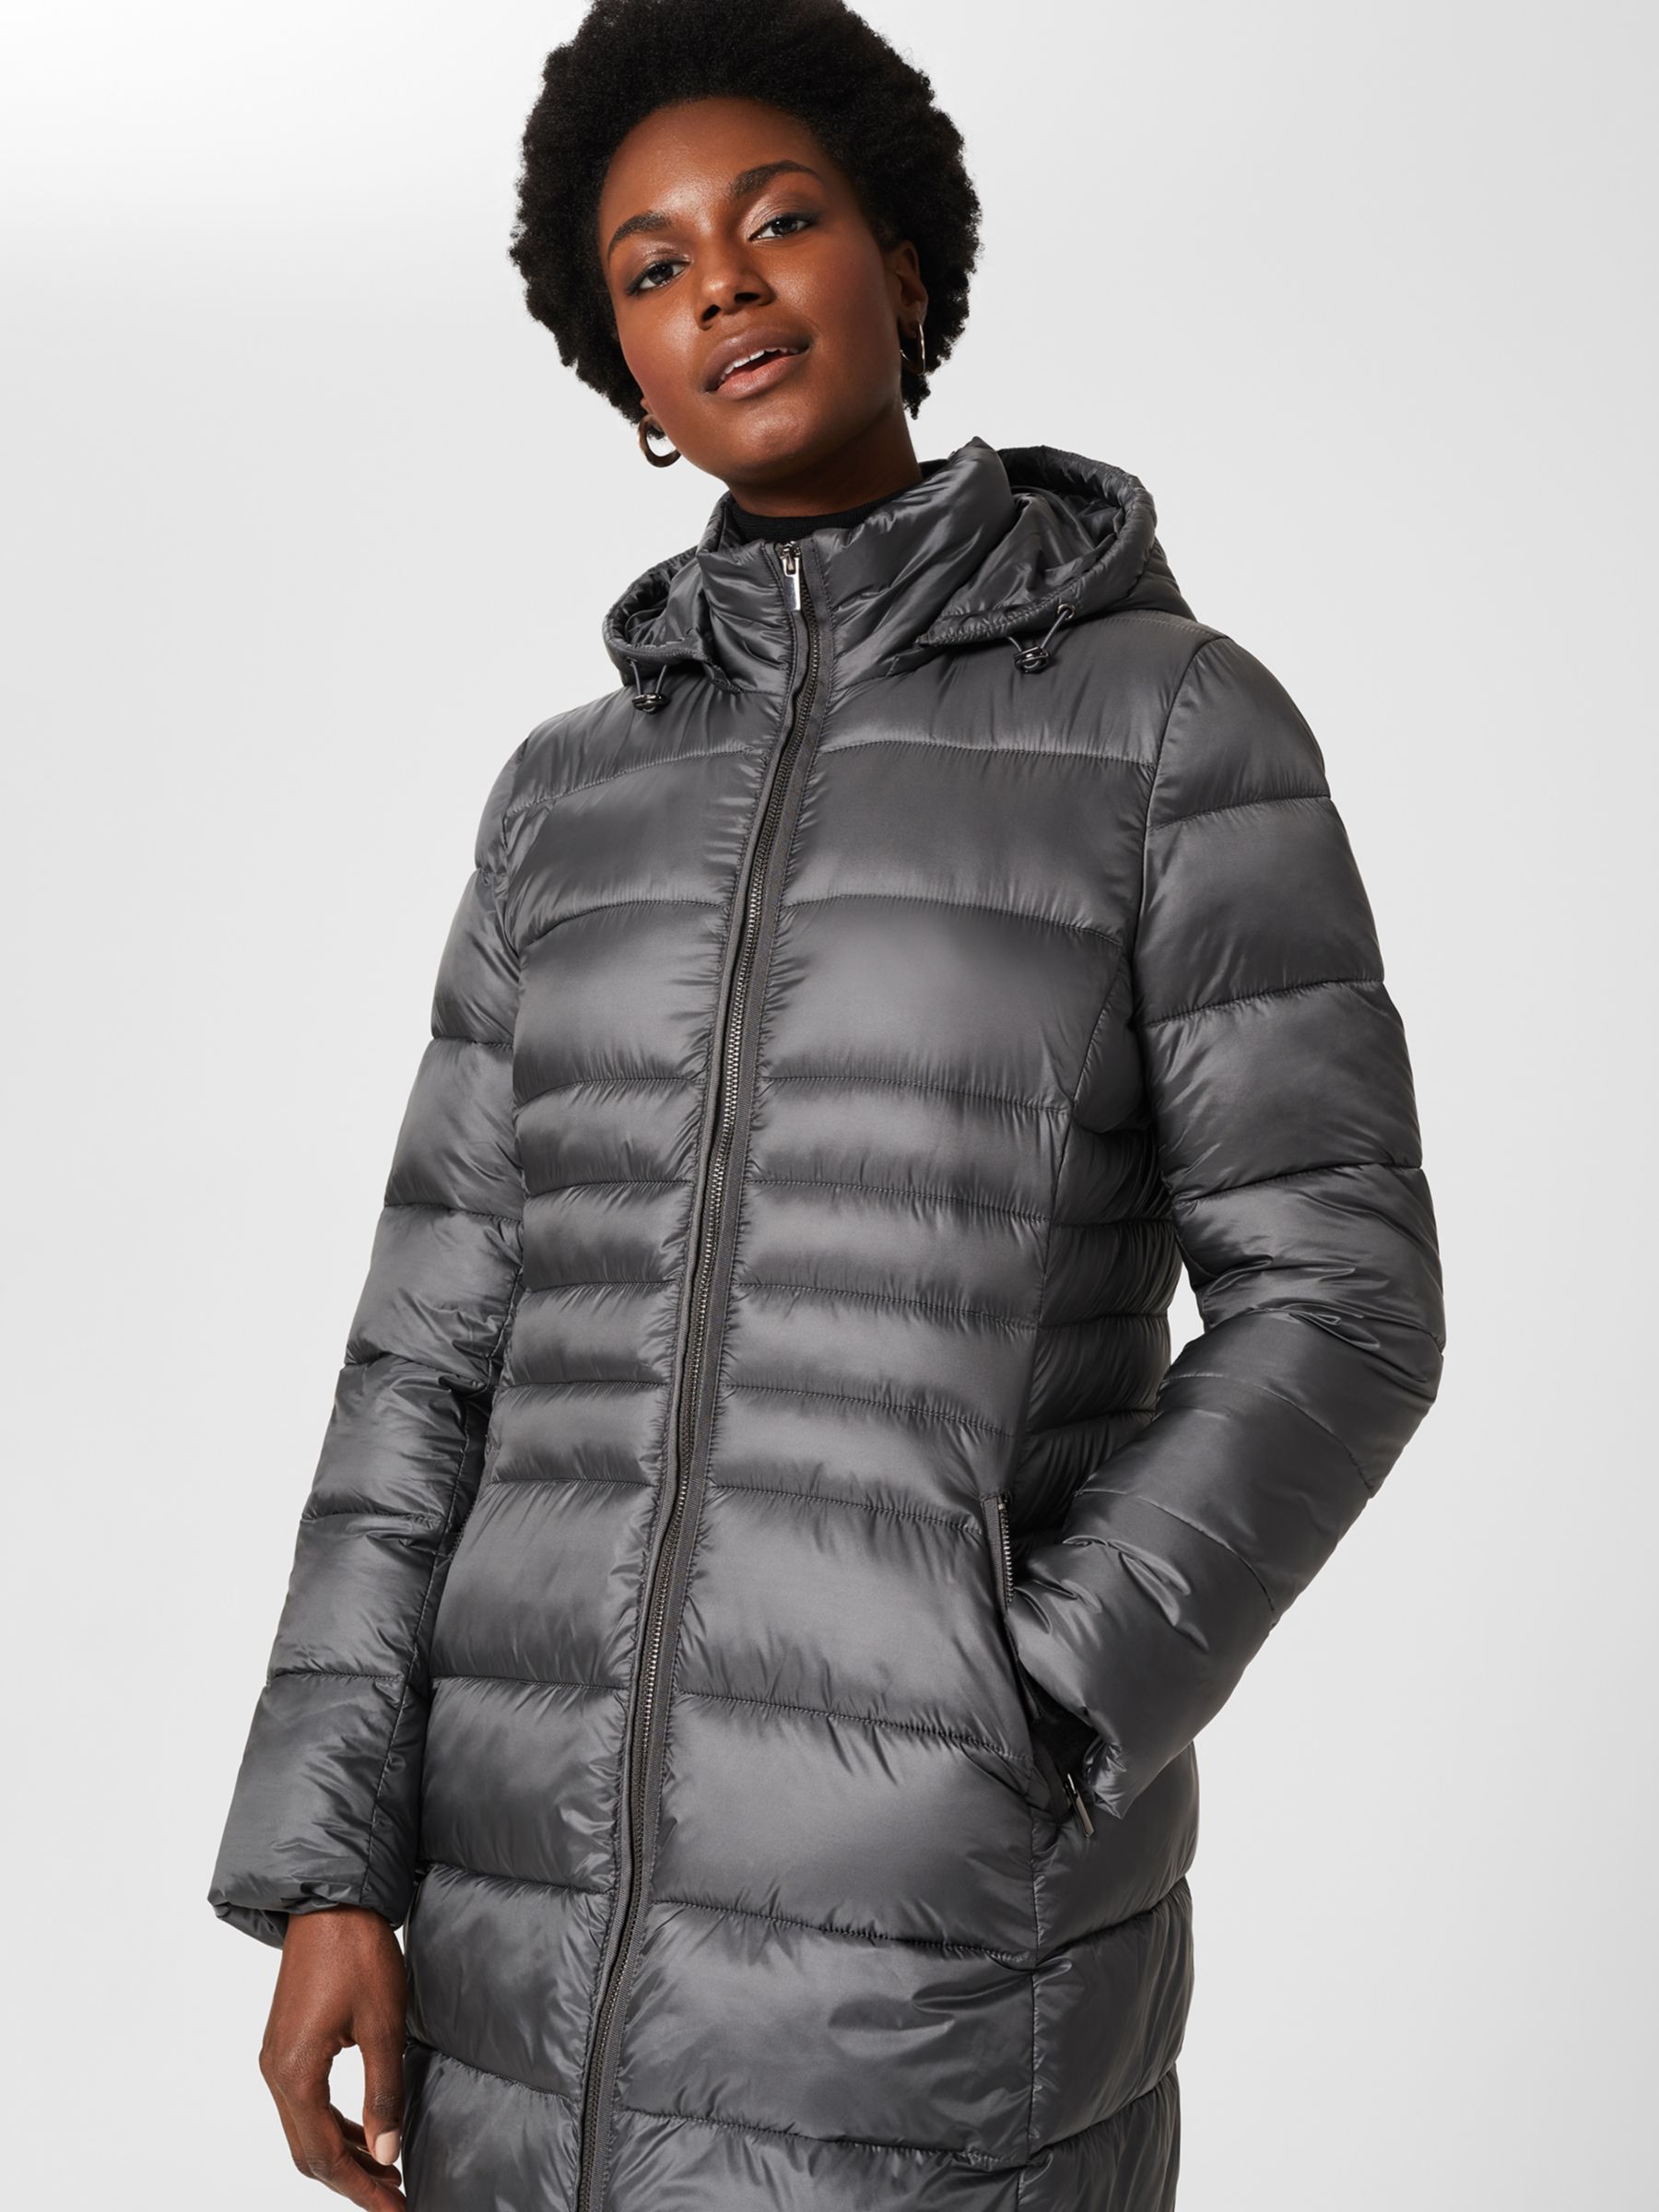 Hobbs Danika Longline Puffer Jacket, Charcoal Grey at John Lewis & Partners